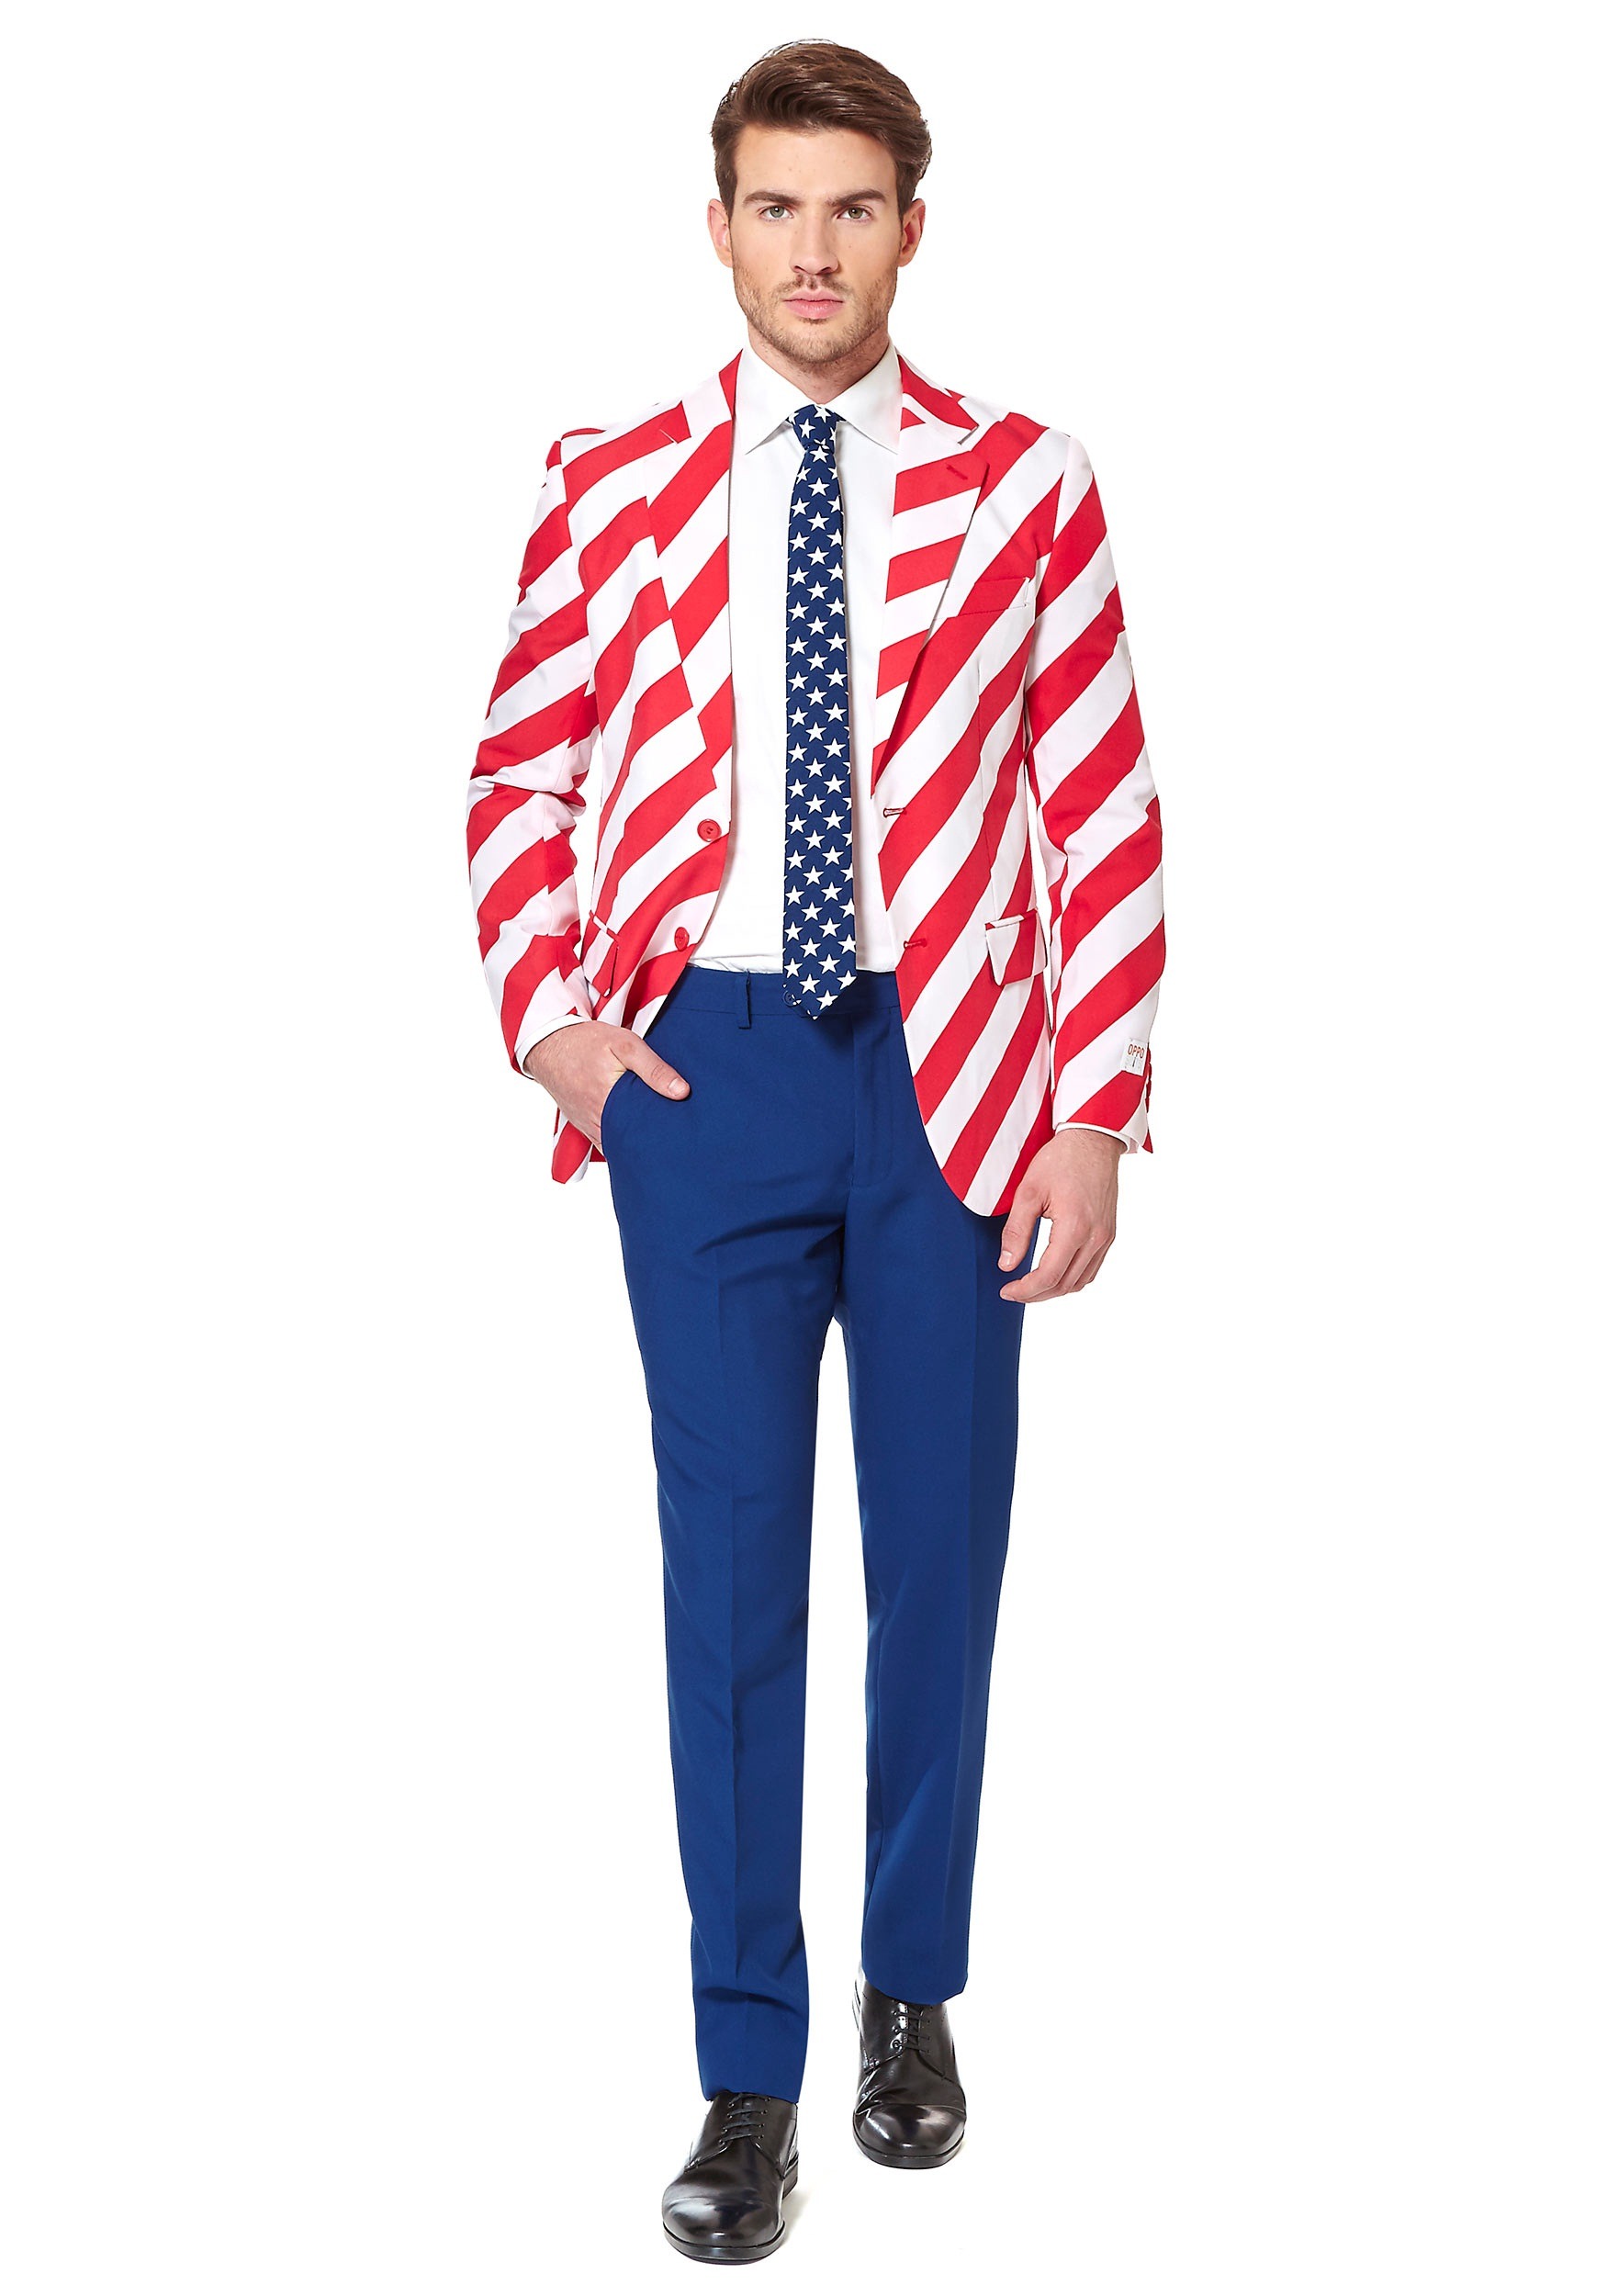 Men’s OppoSuits United Stripes Suit Costume